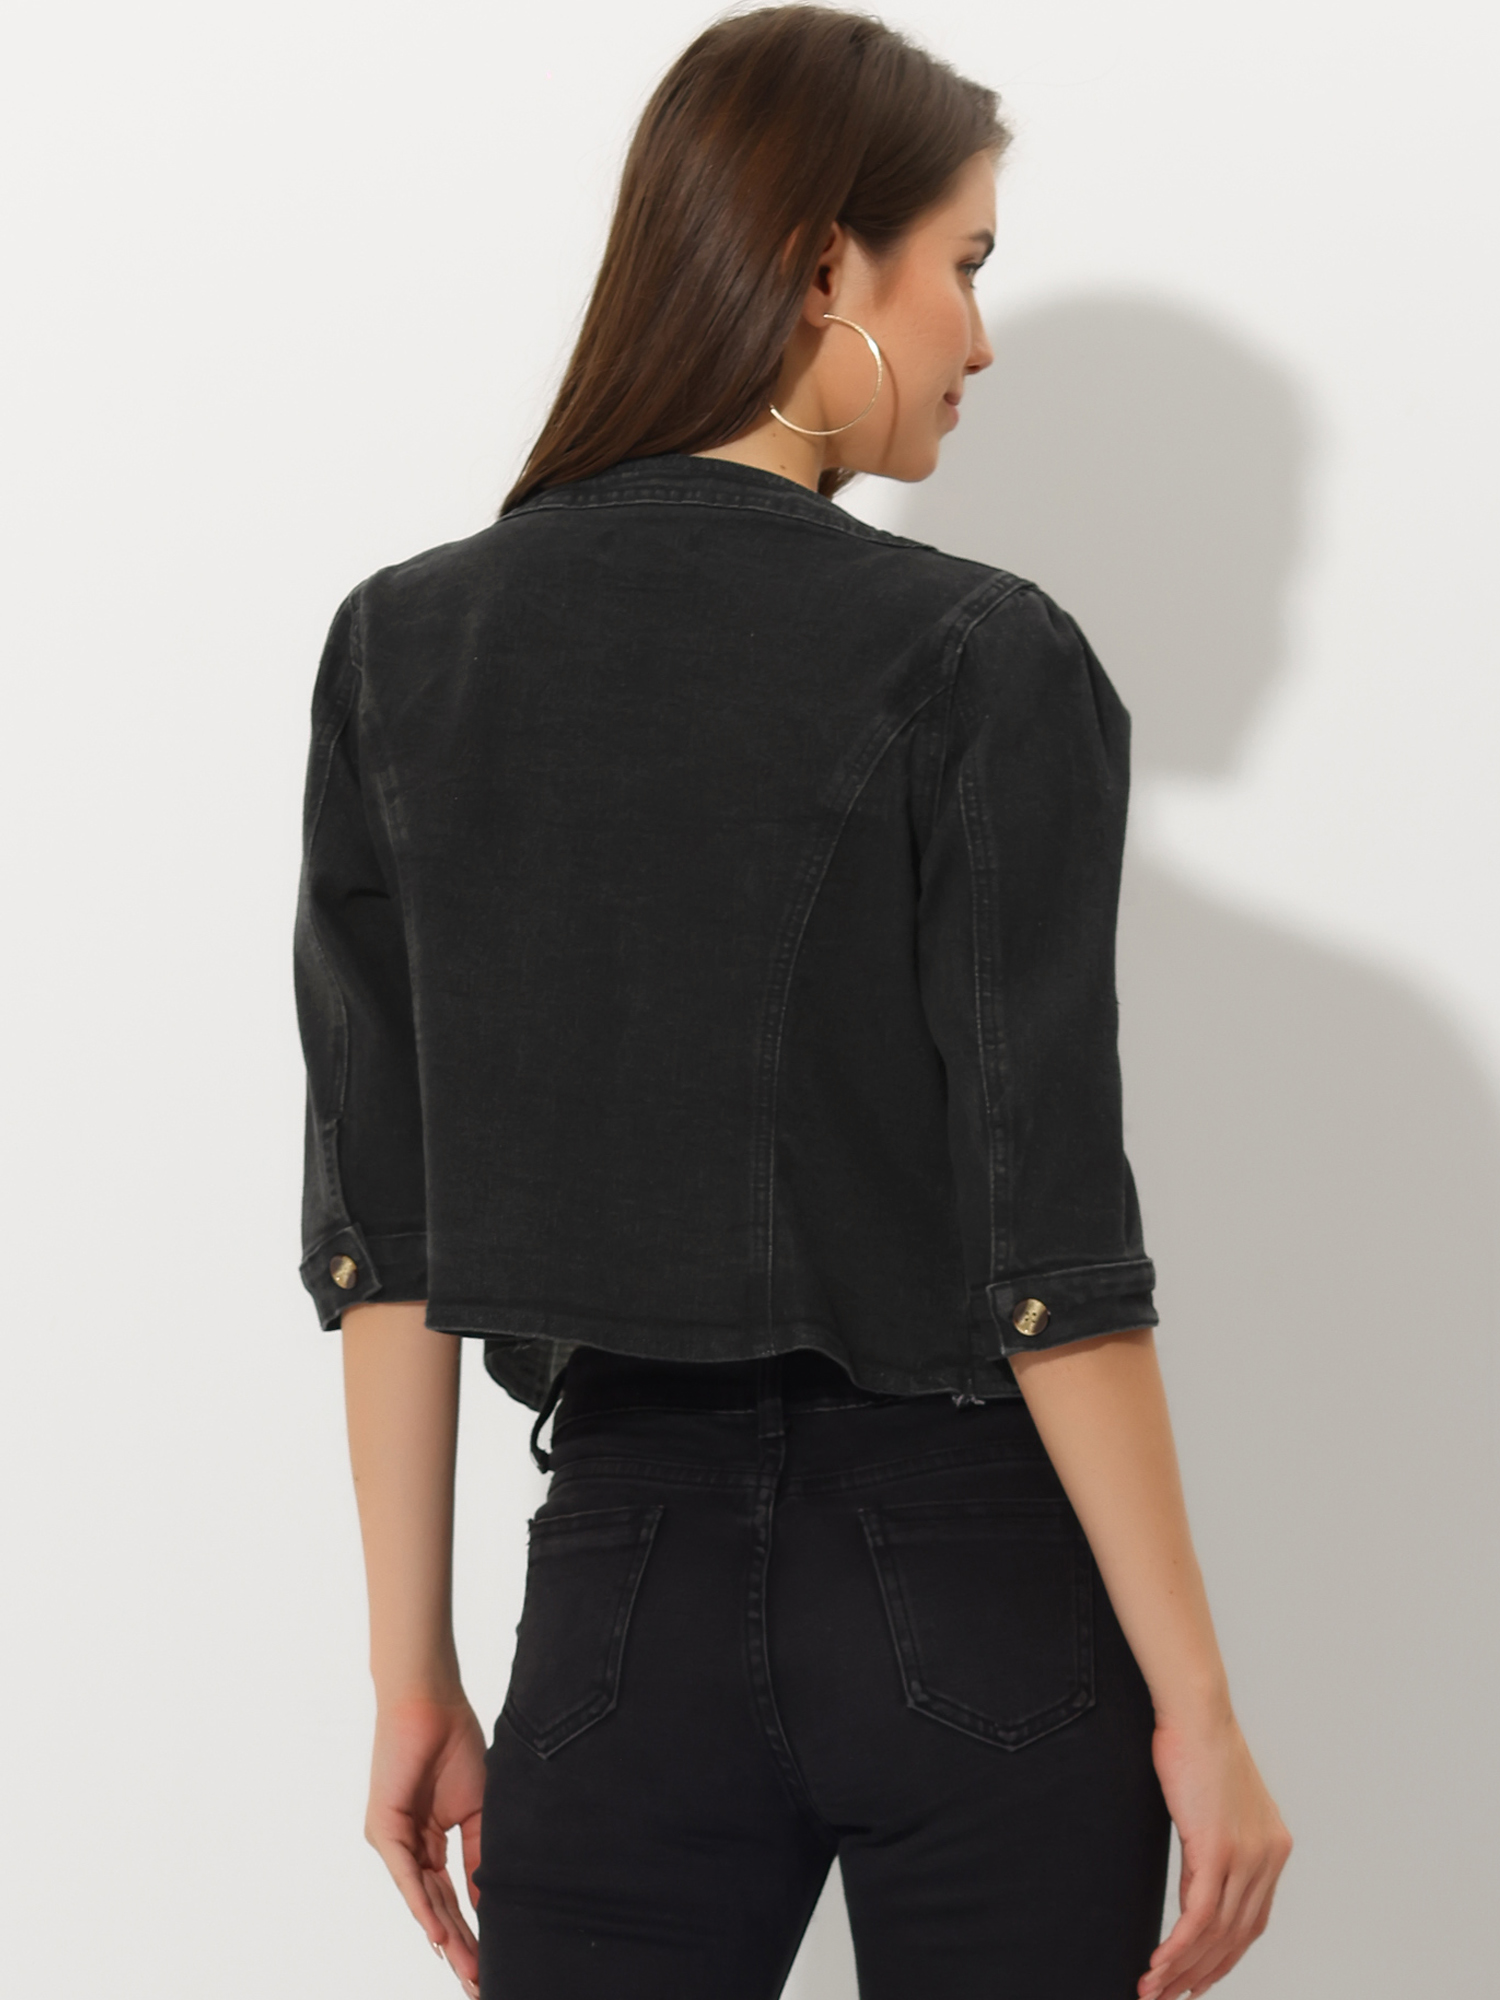 Unique Bargains Denim Jacket for Women's Collarless Pockets 3/4 Sleeve Jean Jackets